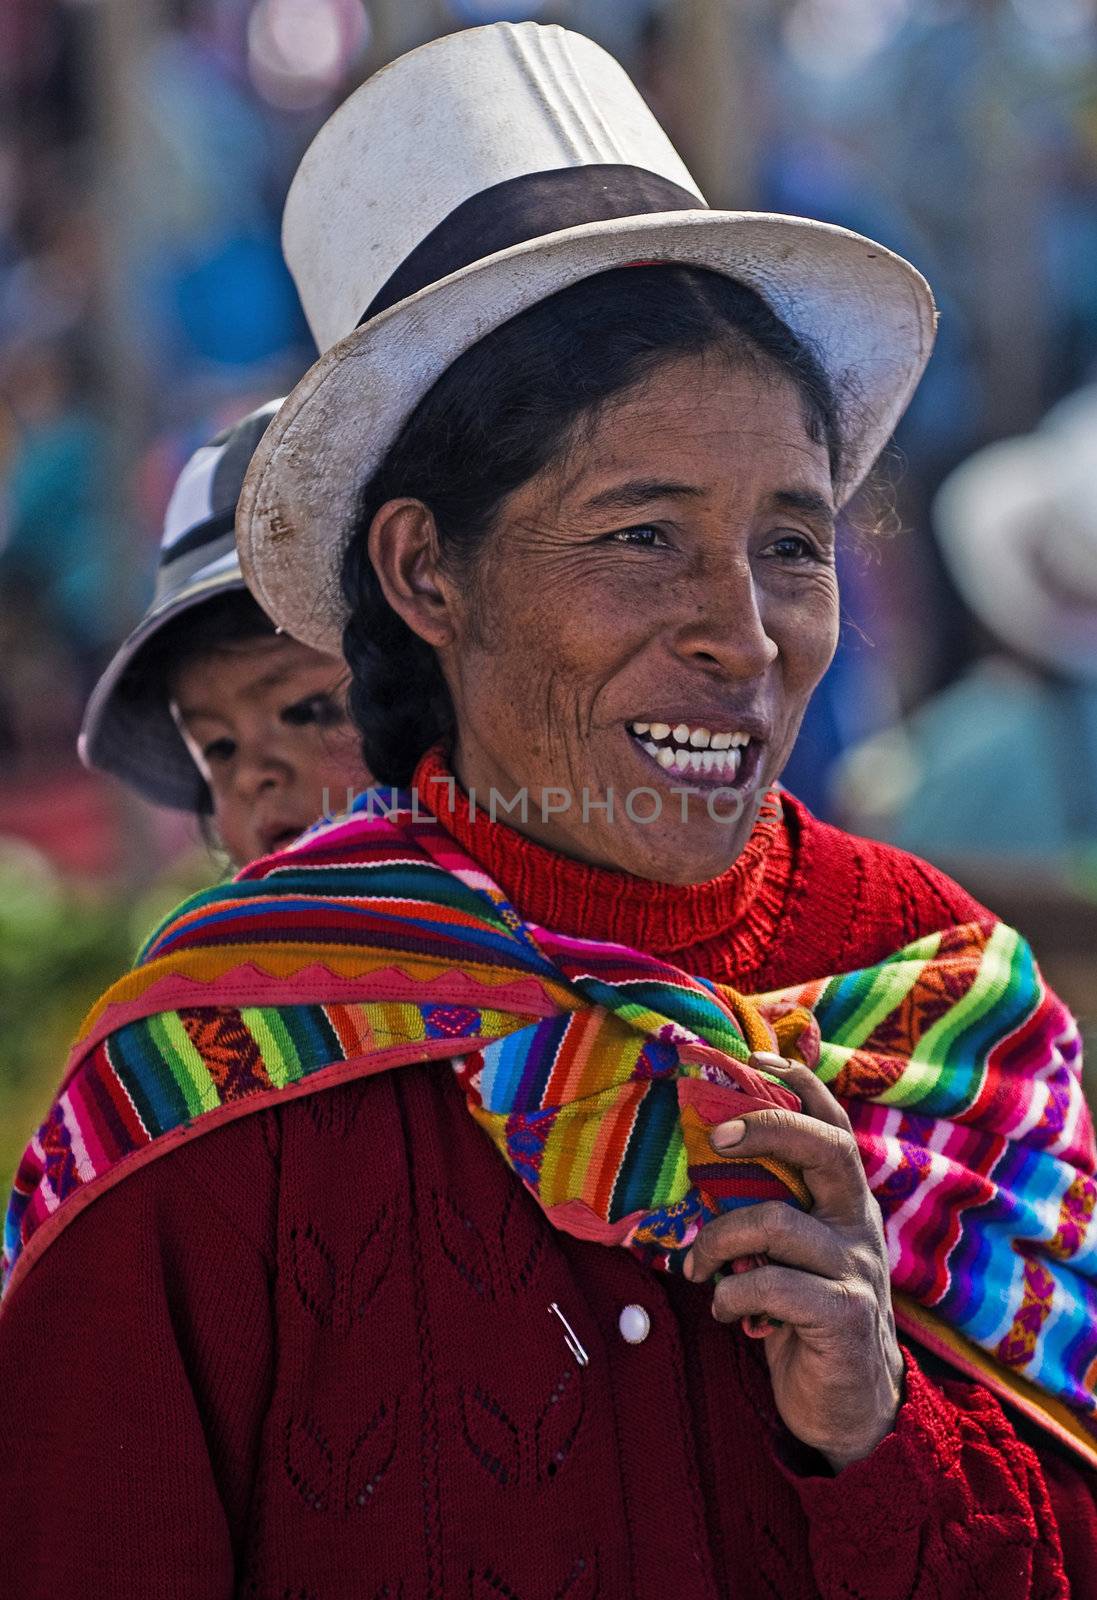 Peruvian mother by kobby_dagan